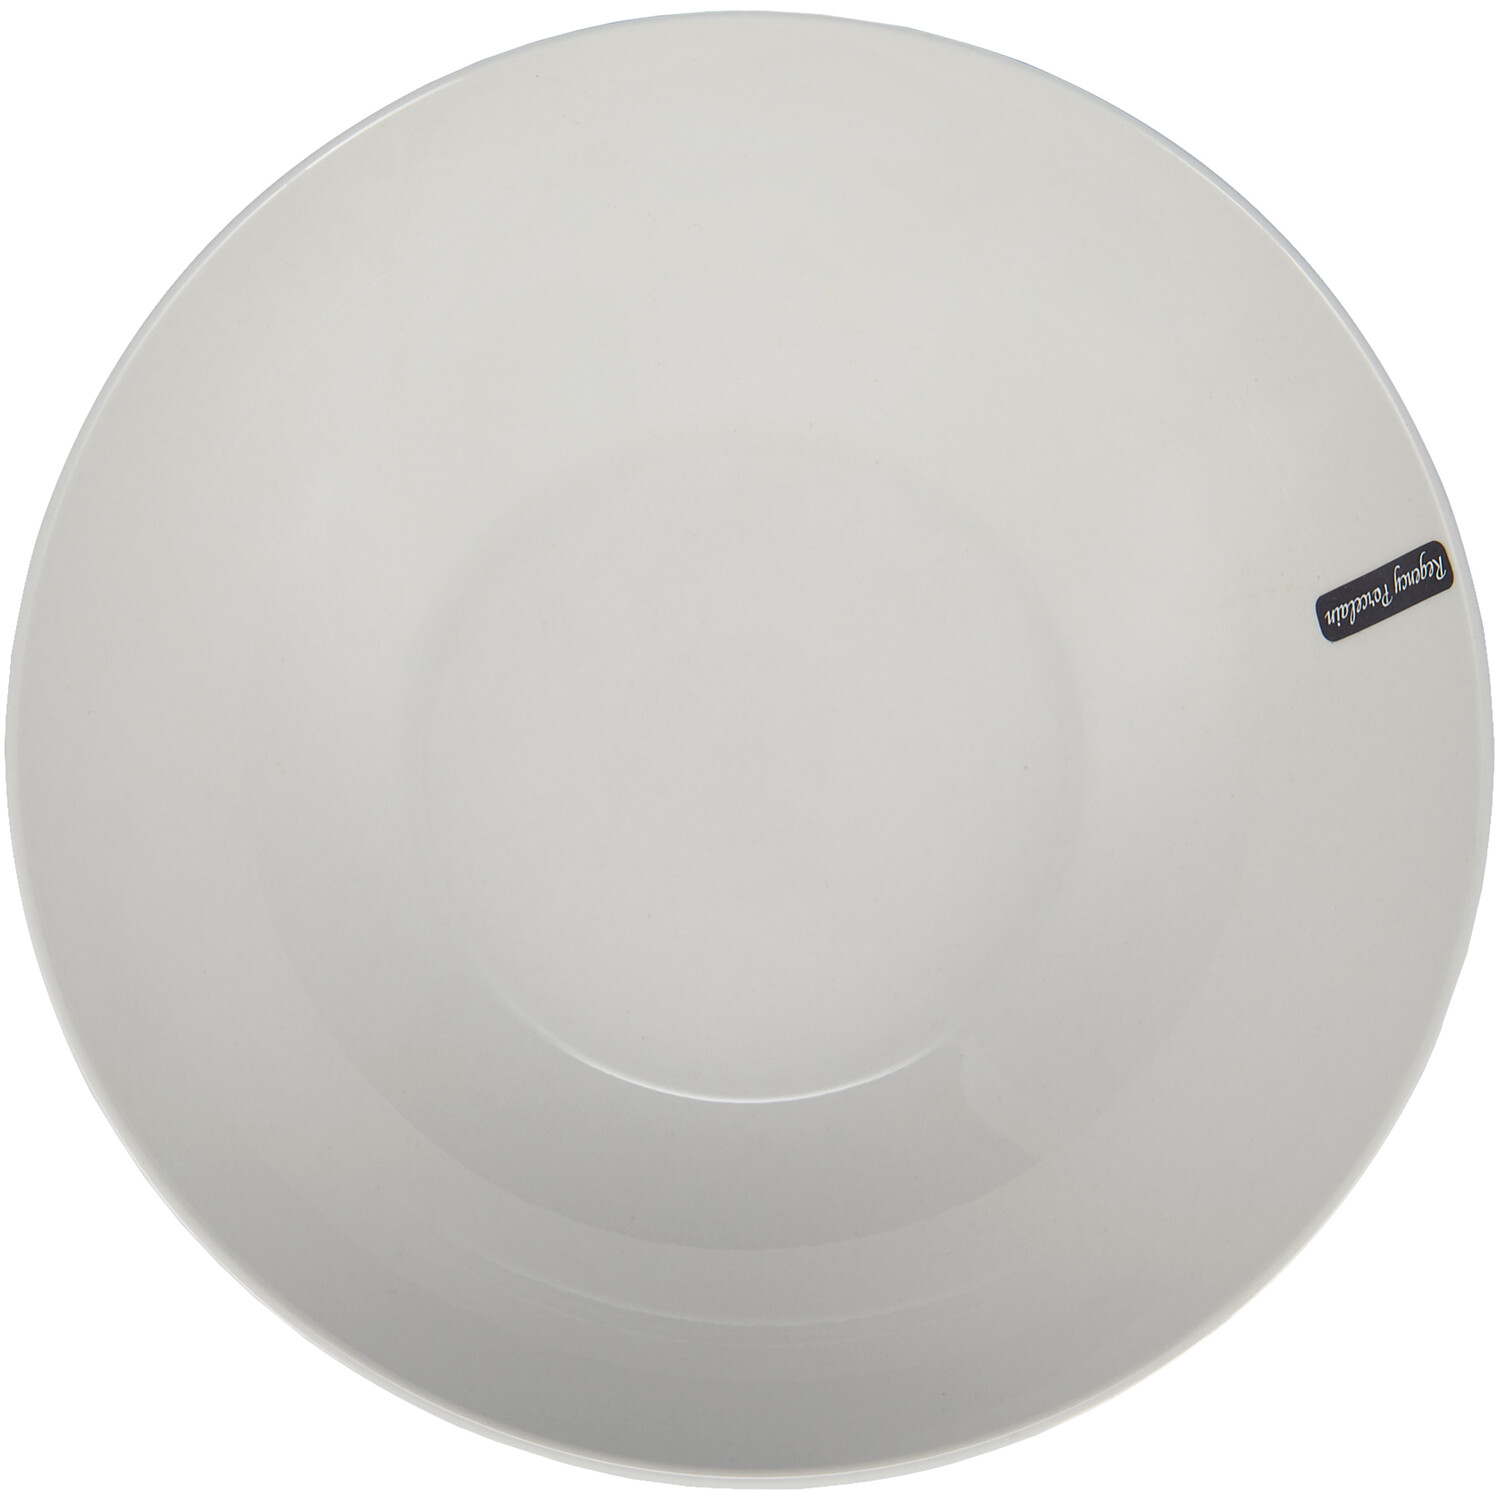 Regency Porcelain Large Bowl - White Image 3